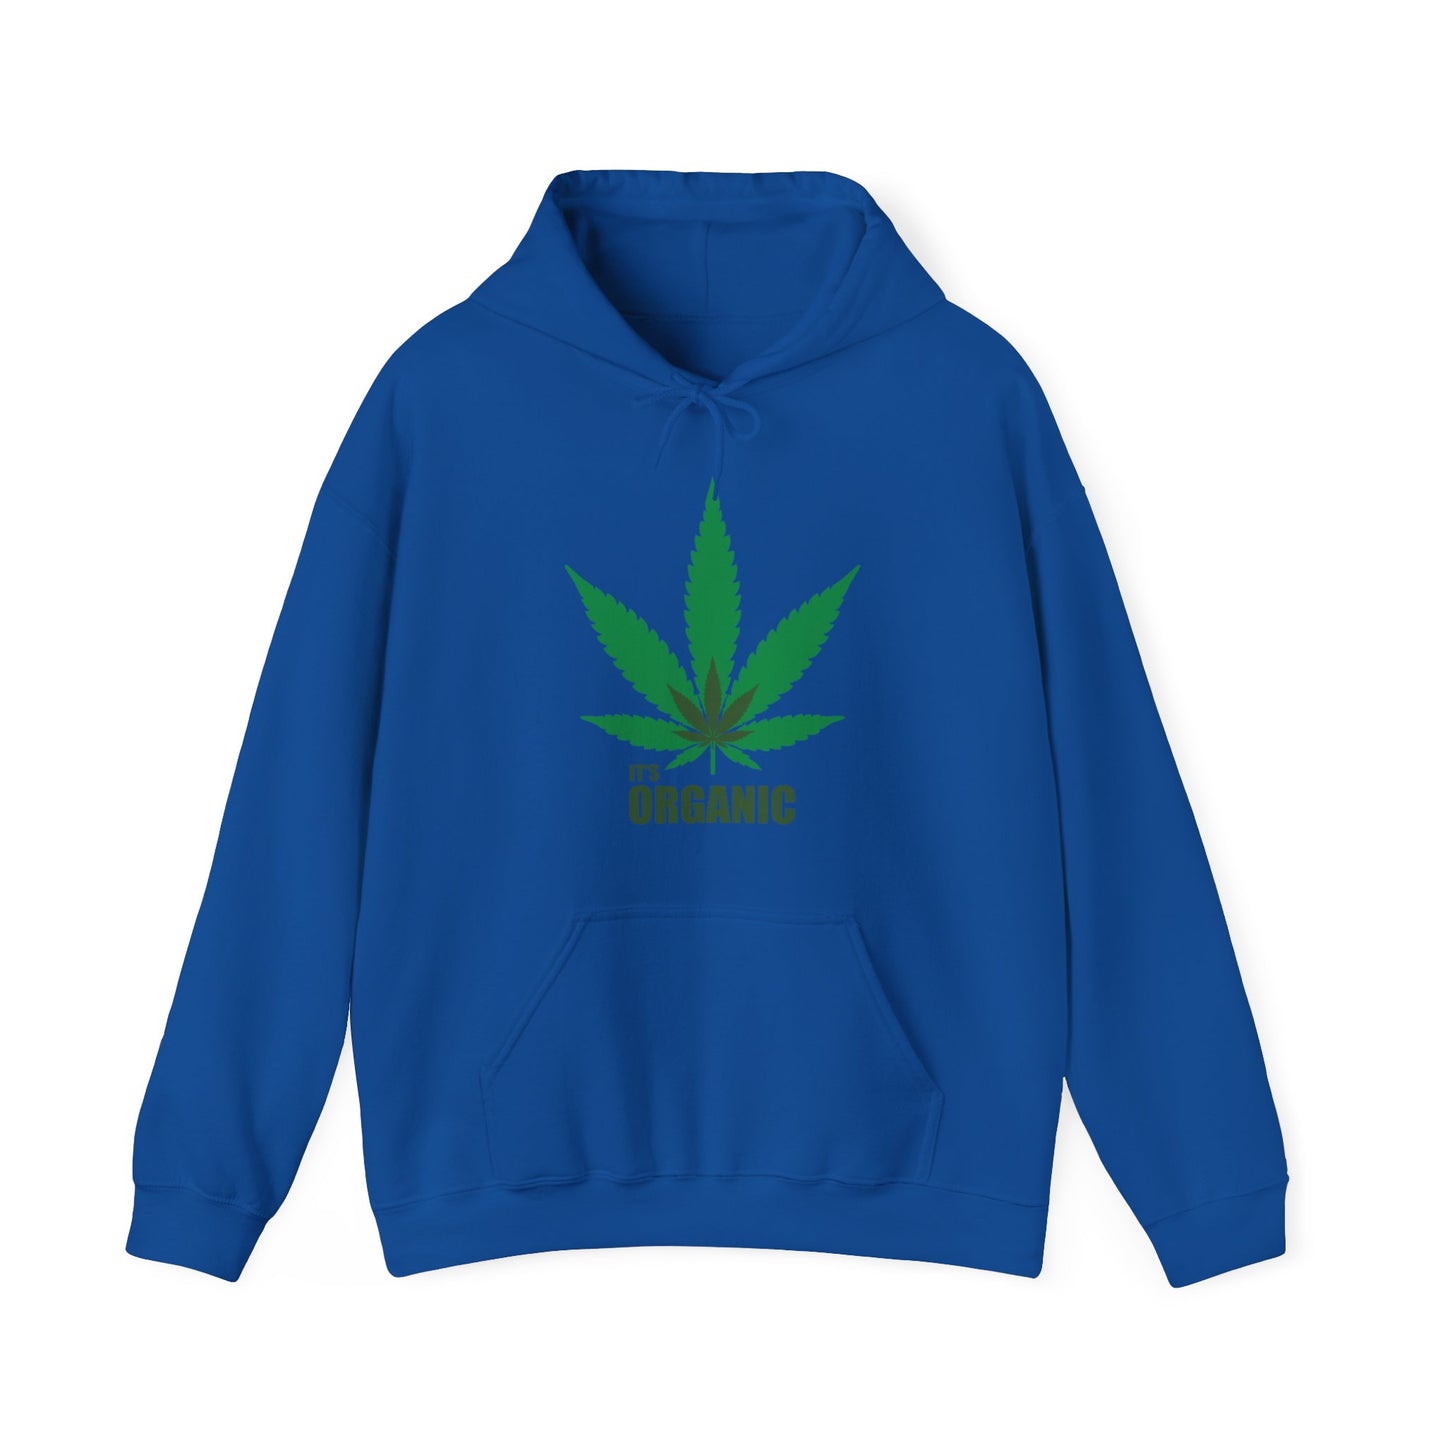 Unisex its organic hoodie